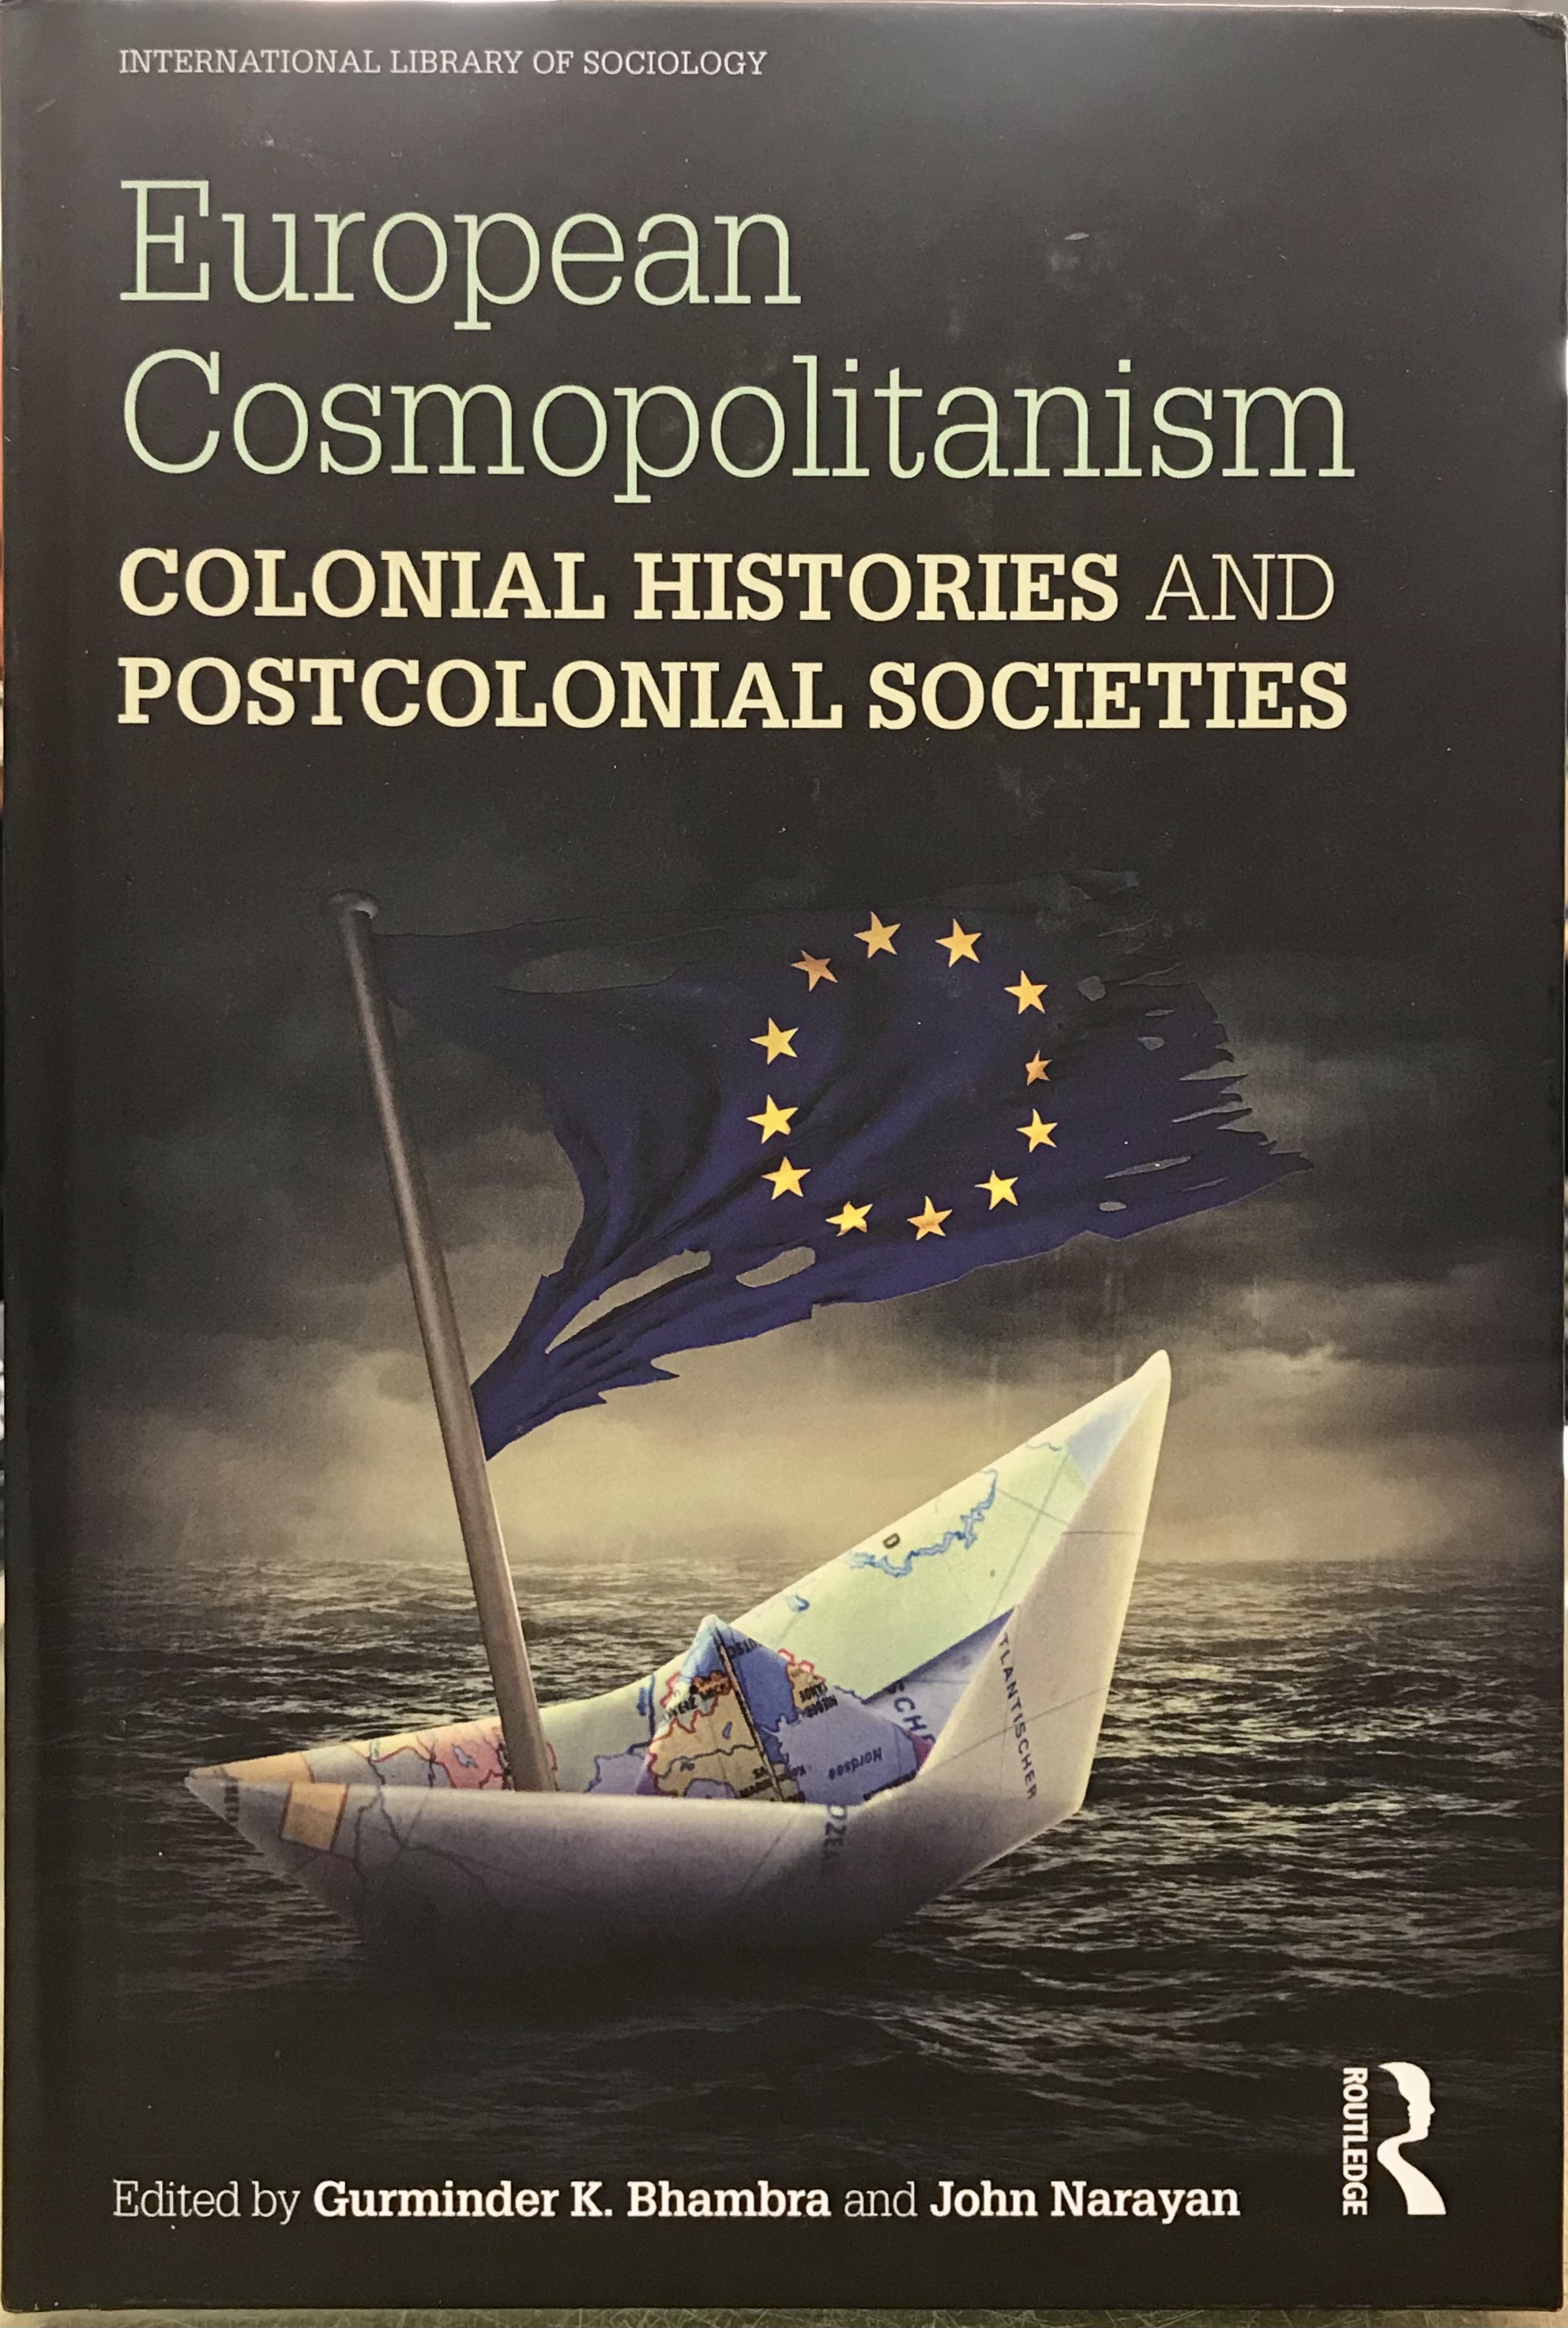 European Cosmopolitanism: Colonial Histories and Postcolonial Societies (International Library of Sociology) - Bhambra, Gurminder & Narayan, John